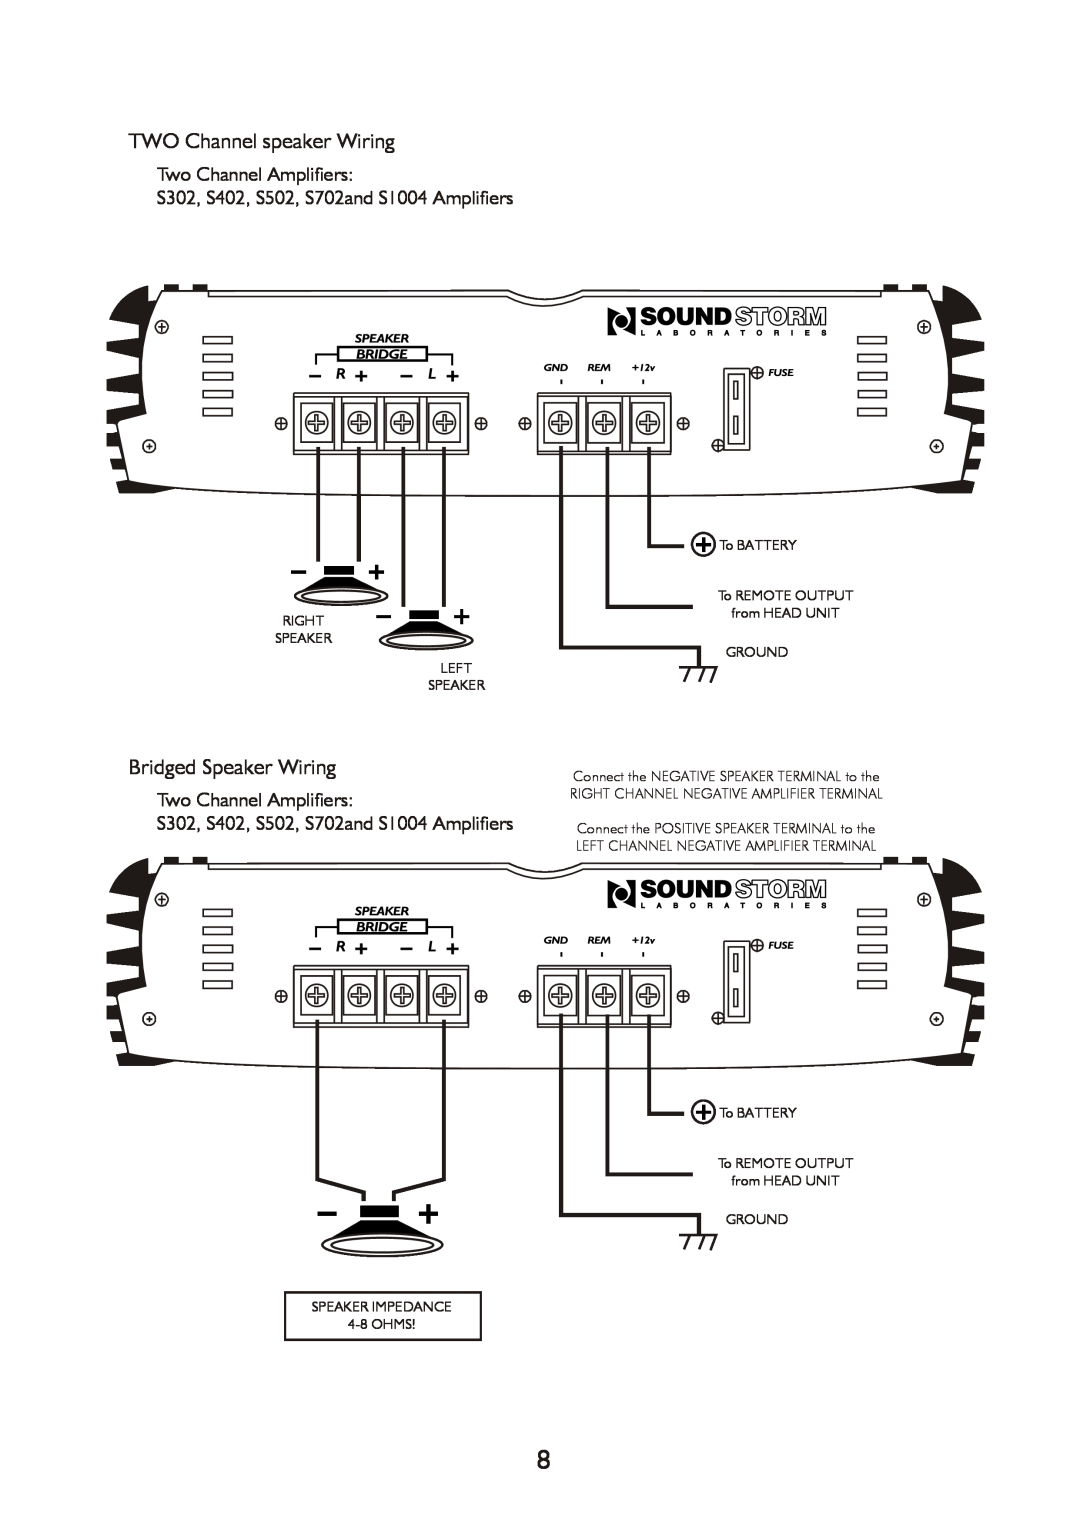 Sound Storm Laboratories Amplifiers manual TWO Channel speaker Wiring, Bridged Speaker Wiring 